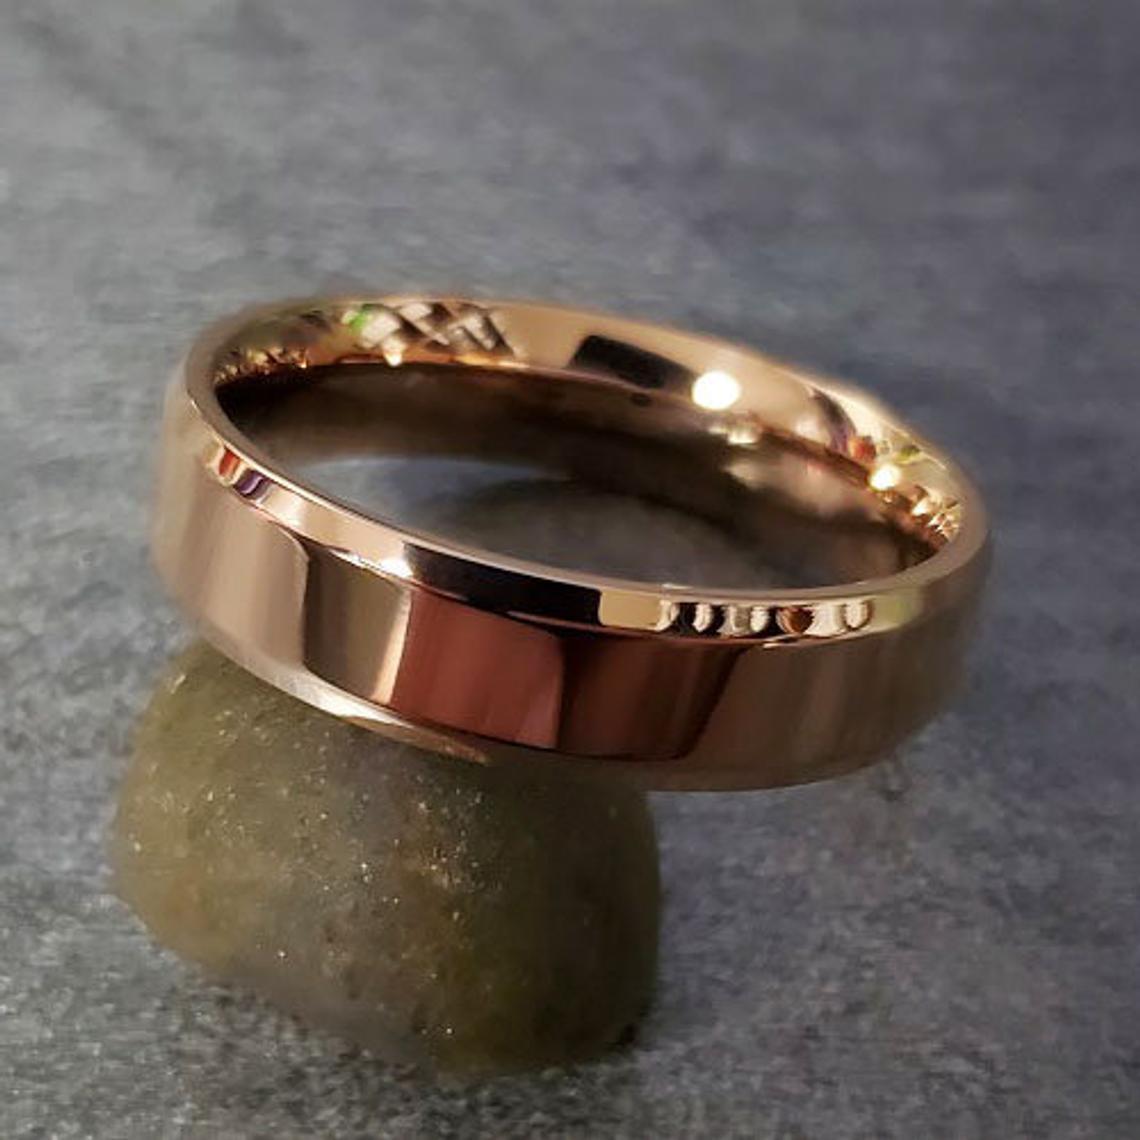 ThinkEngraved Rings Personalized Men's Wedding Band - Beveled Brushed Rose Gold IP